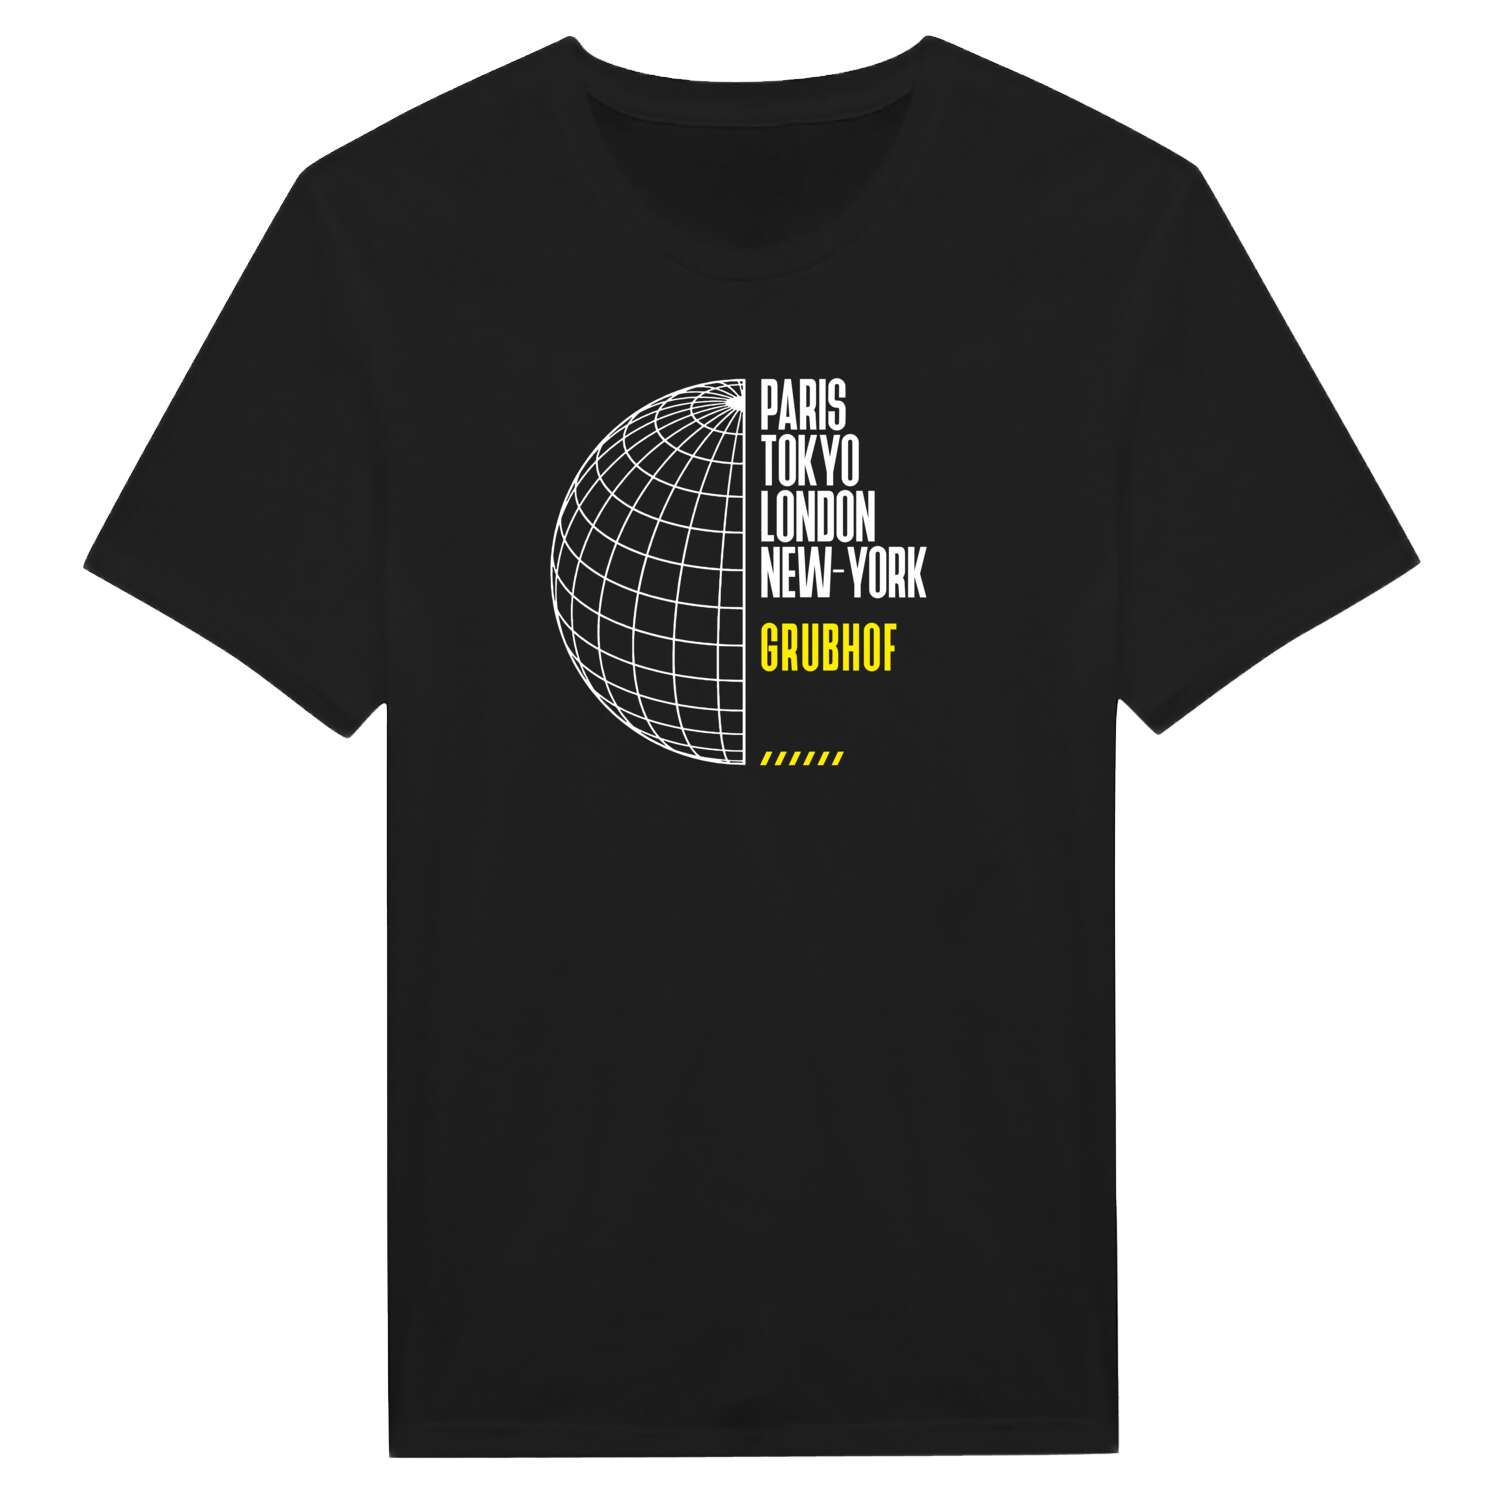 Grubhof T-Shirt »Paris Tokyo London«